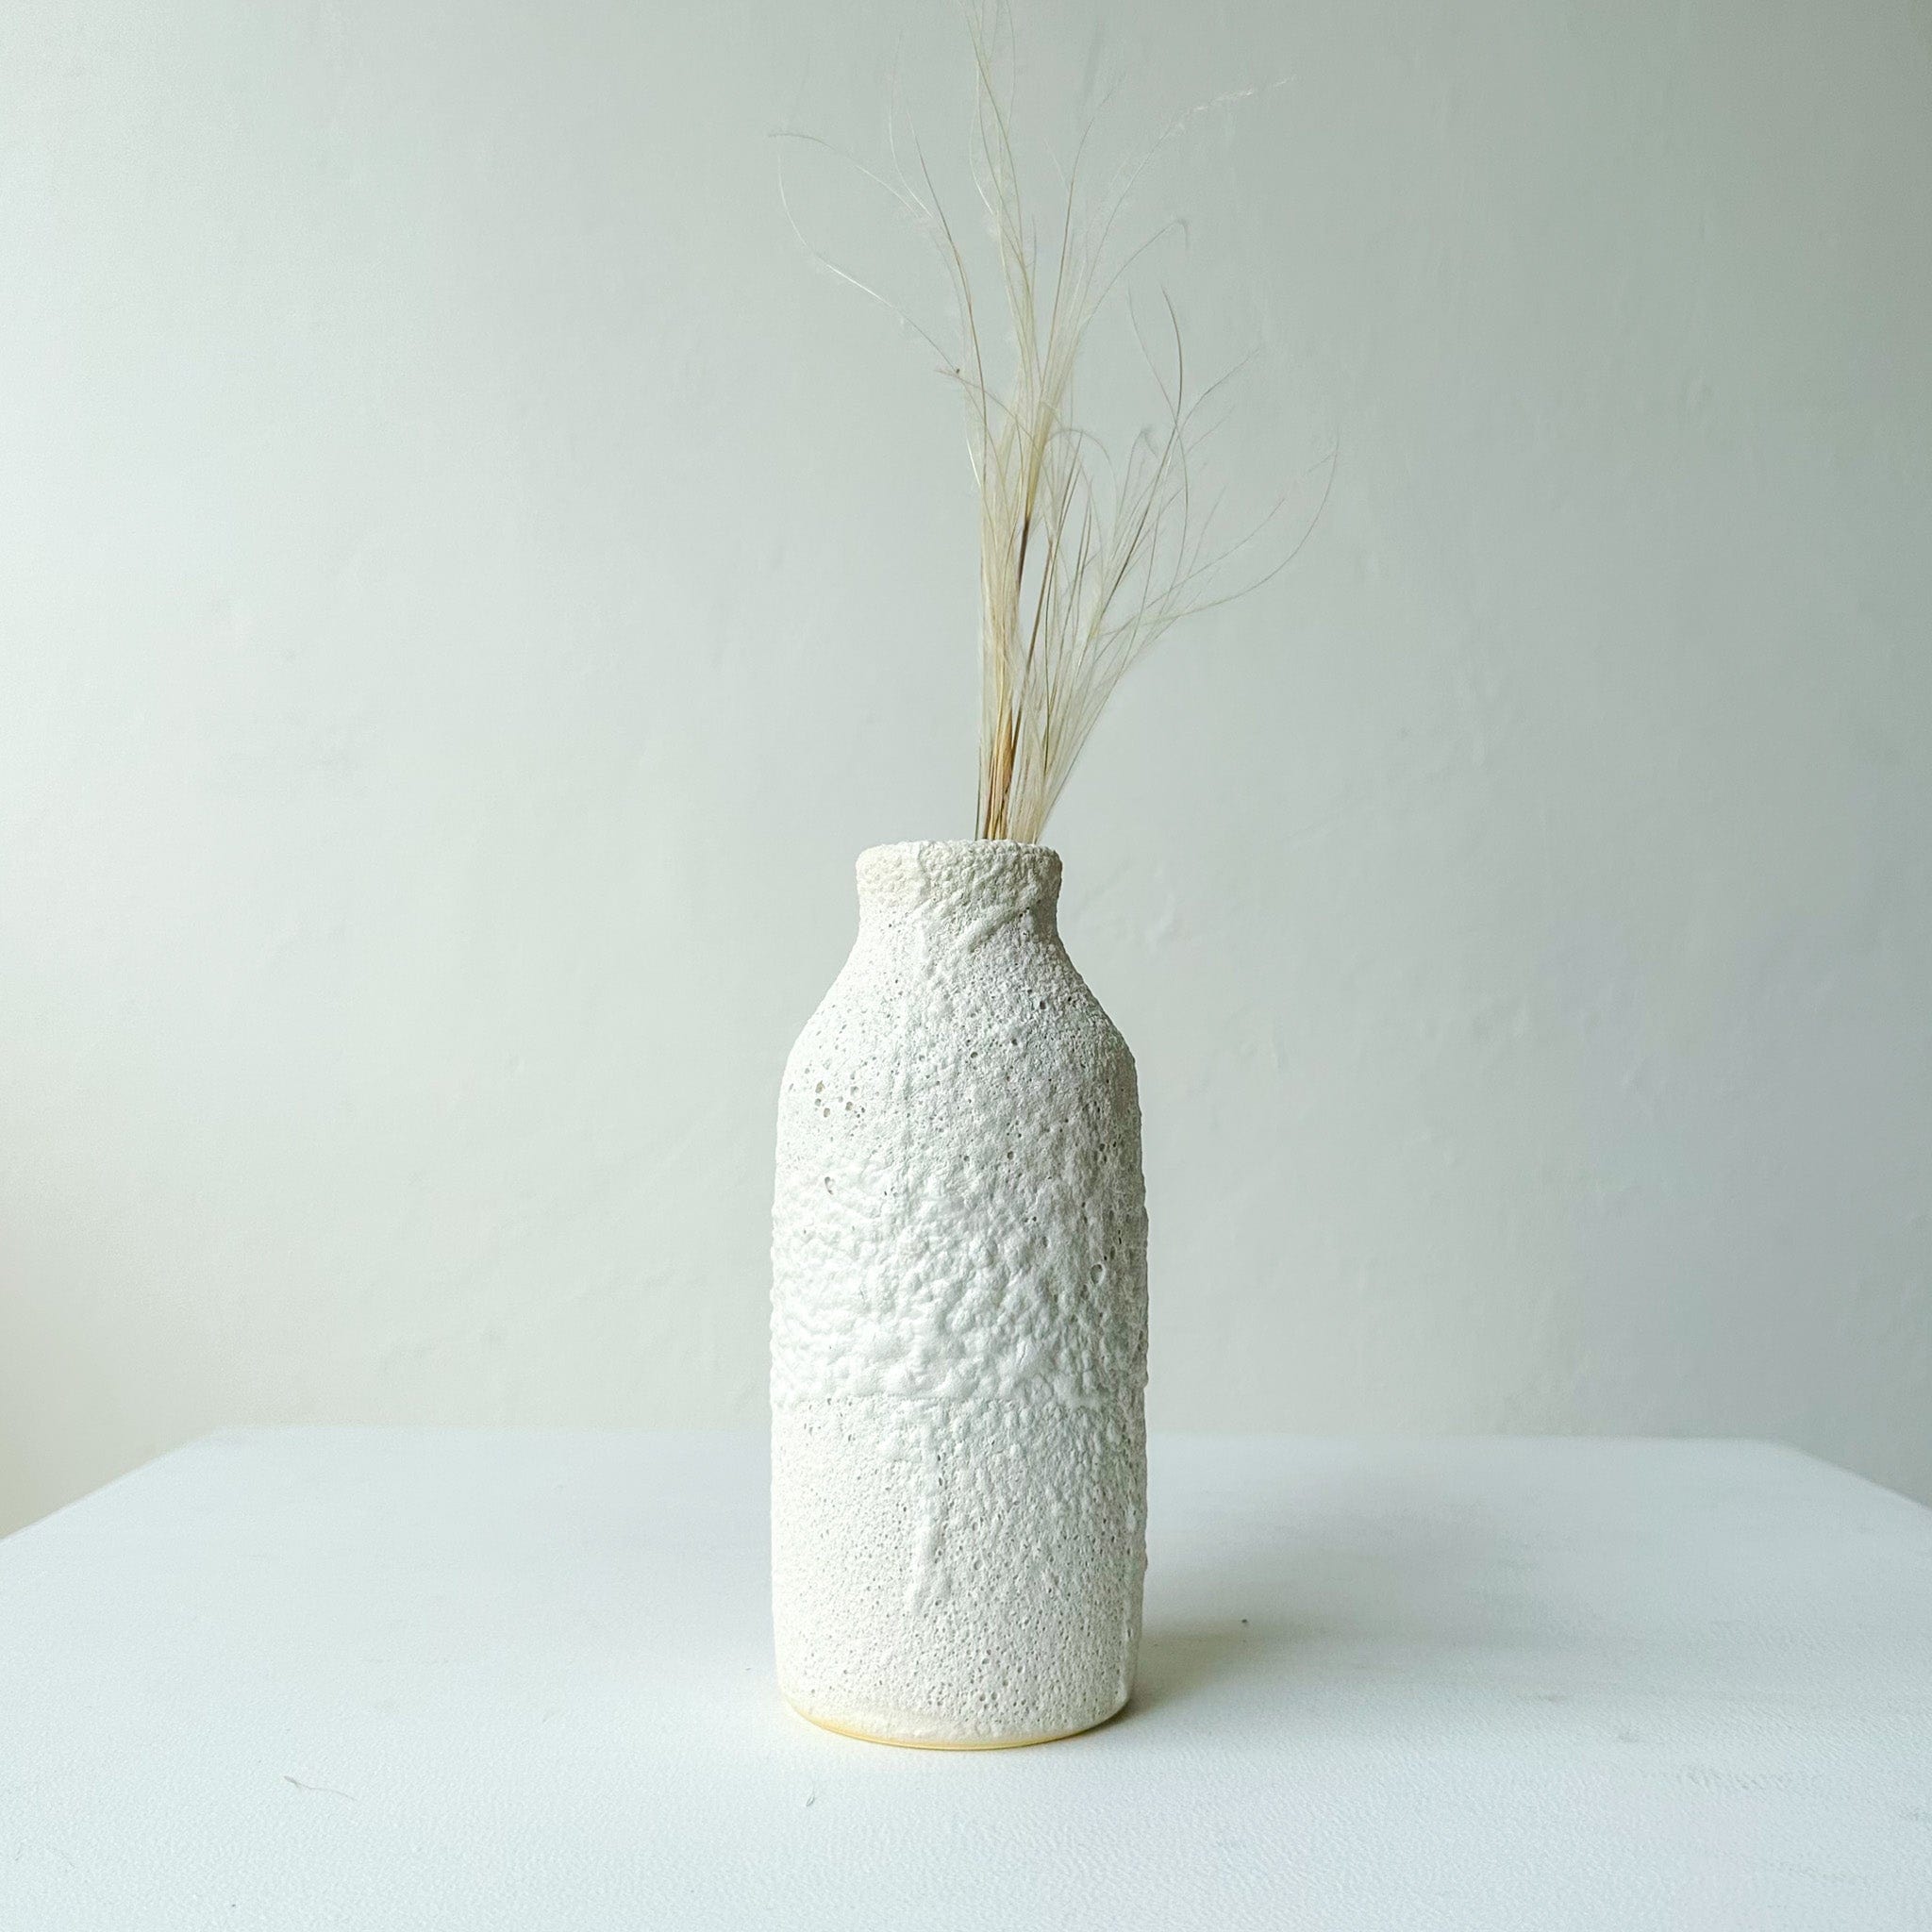 Gina Desantis Ceramics Decor Crater Vase Collection - White